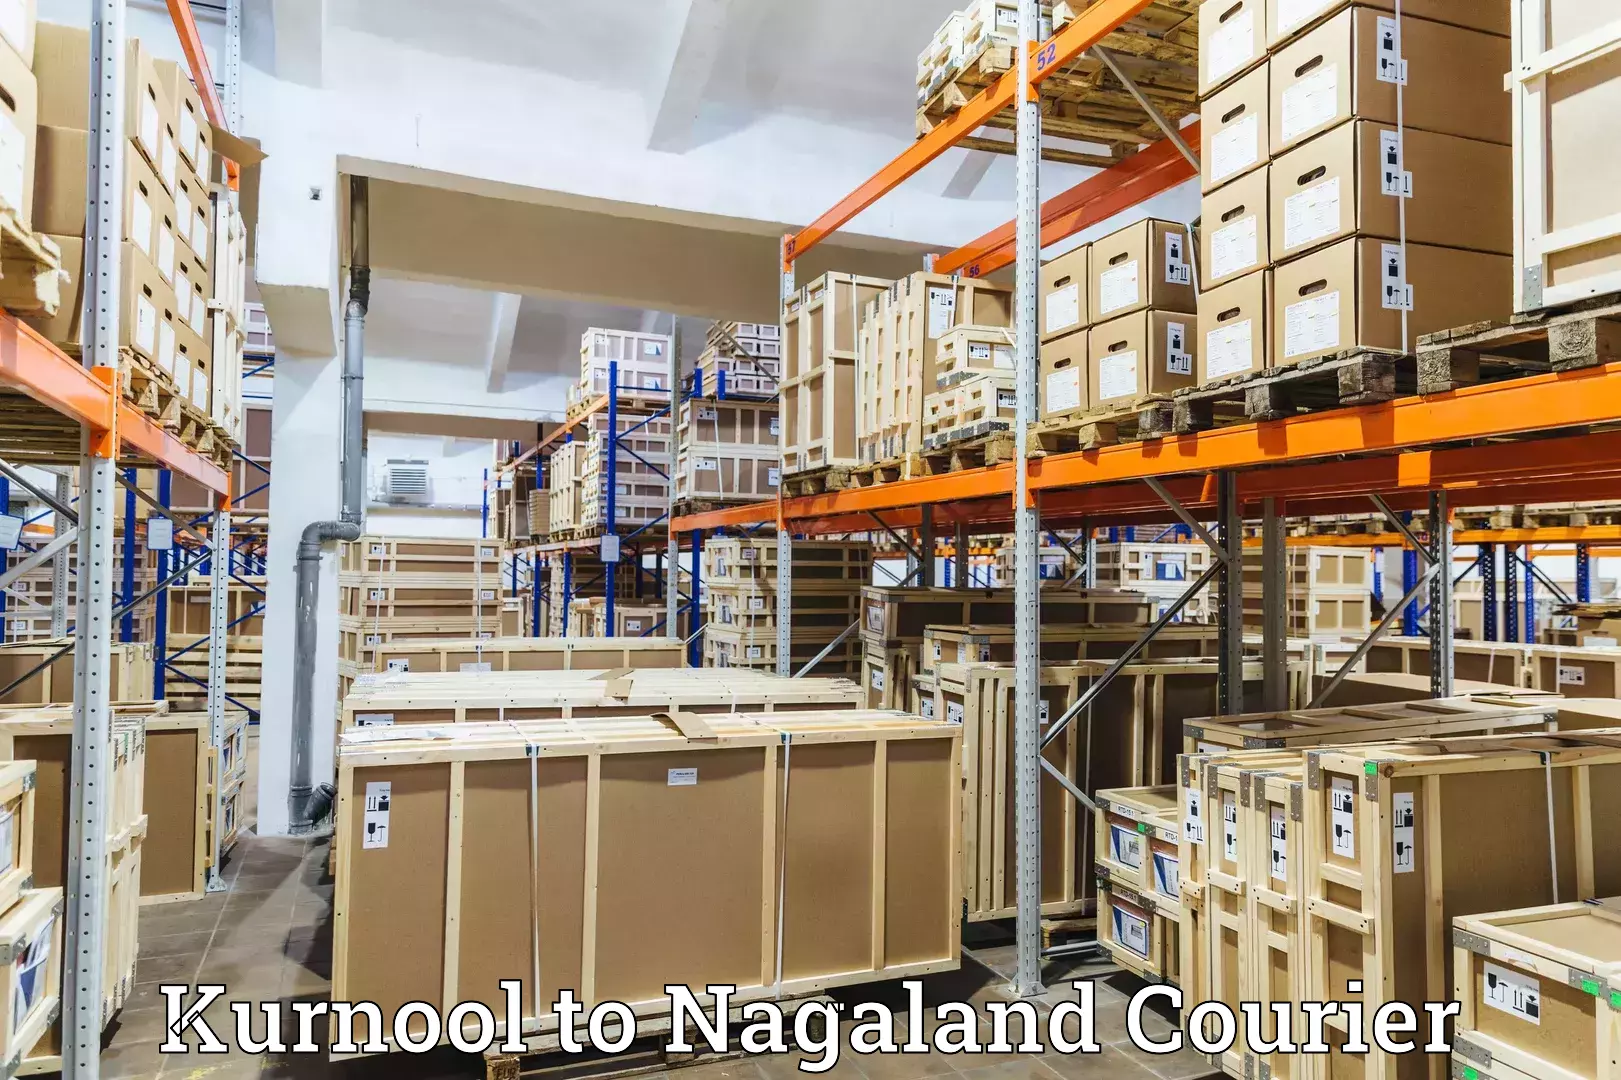 Courier service innovation Kurnool to Nagaland